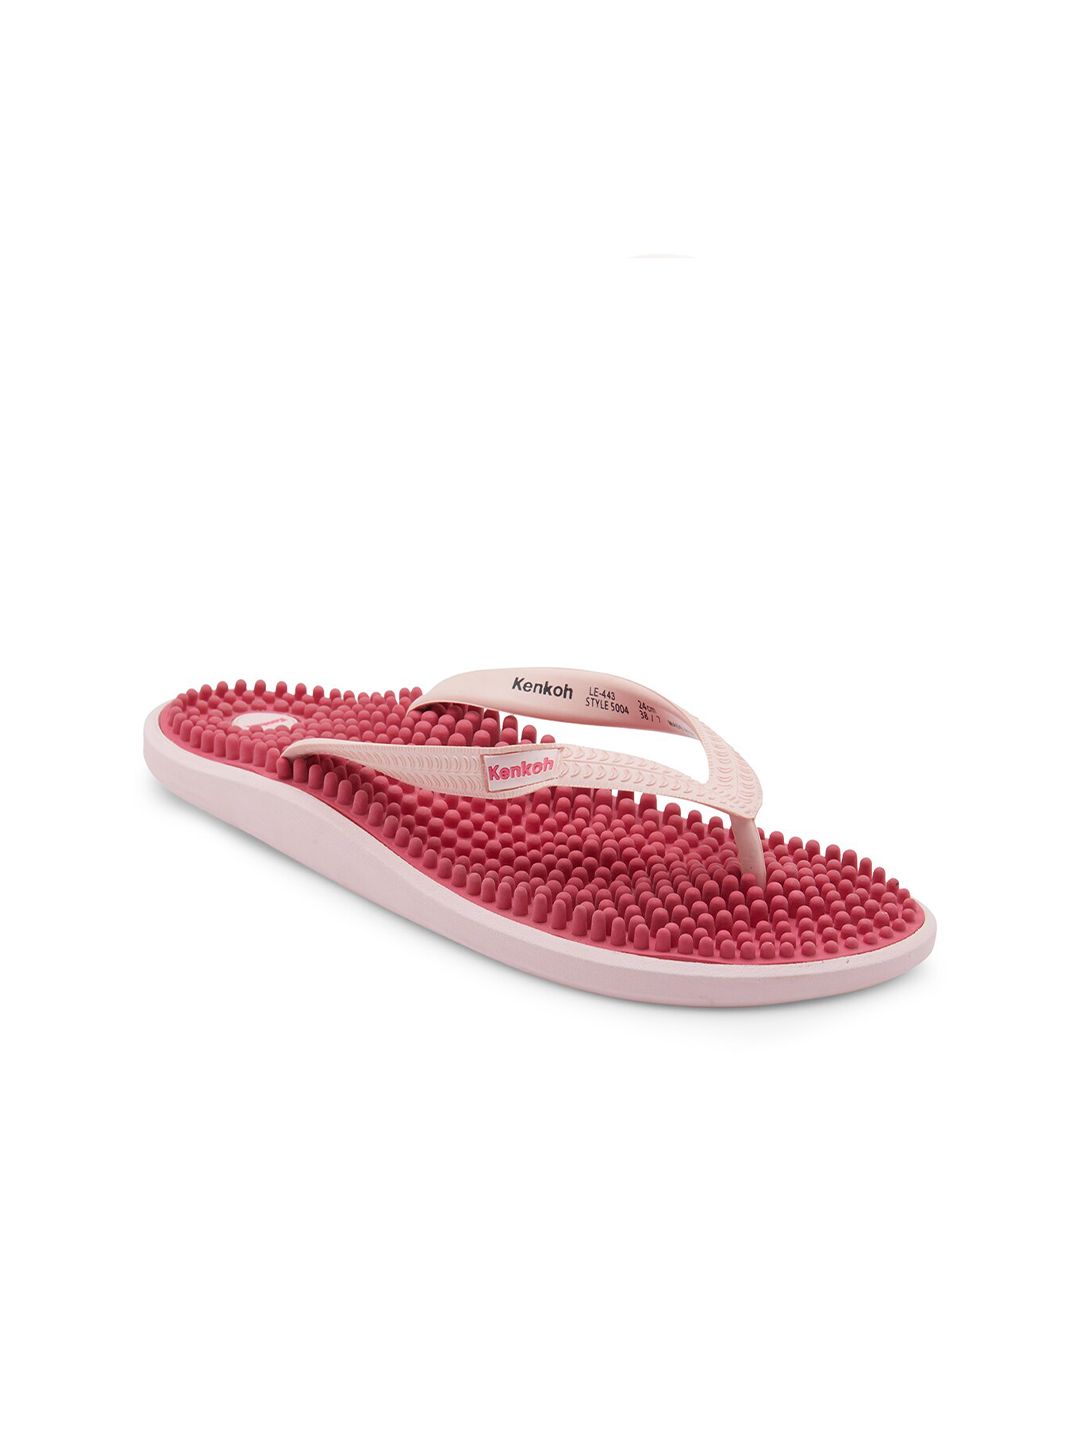 Kenkoh Women Pink & Red Rubber Thong Flip-Flops Price in India